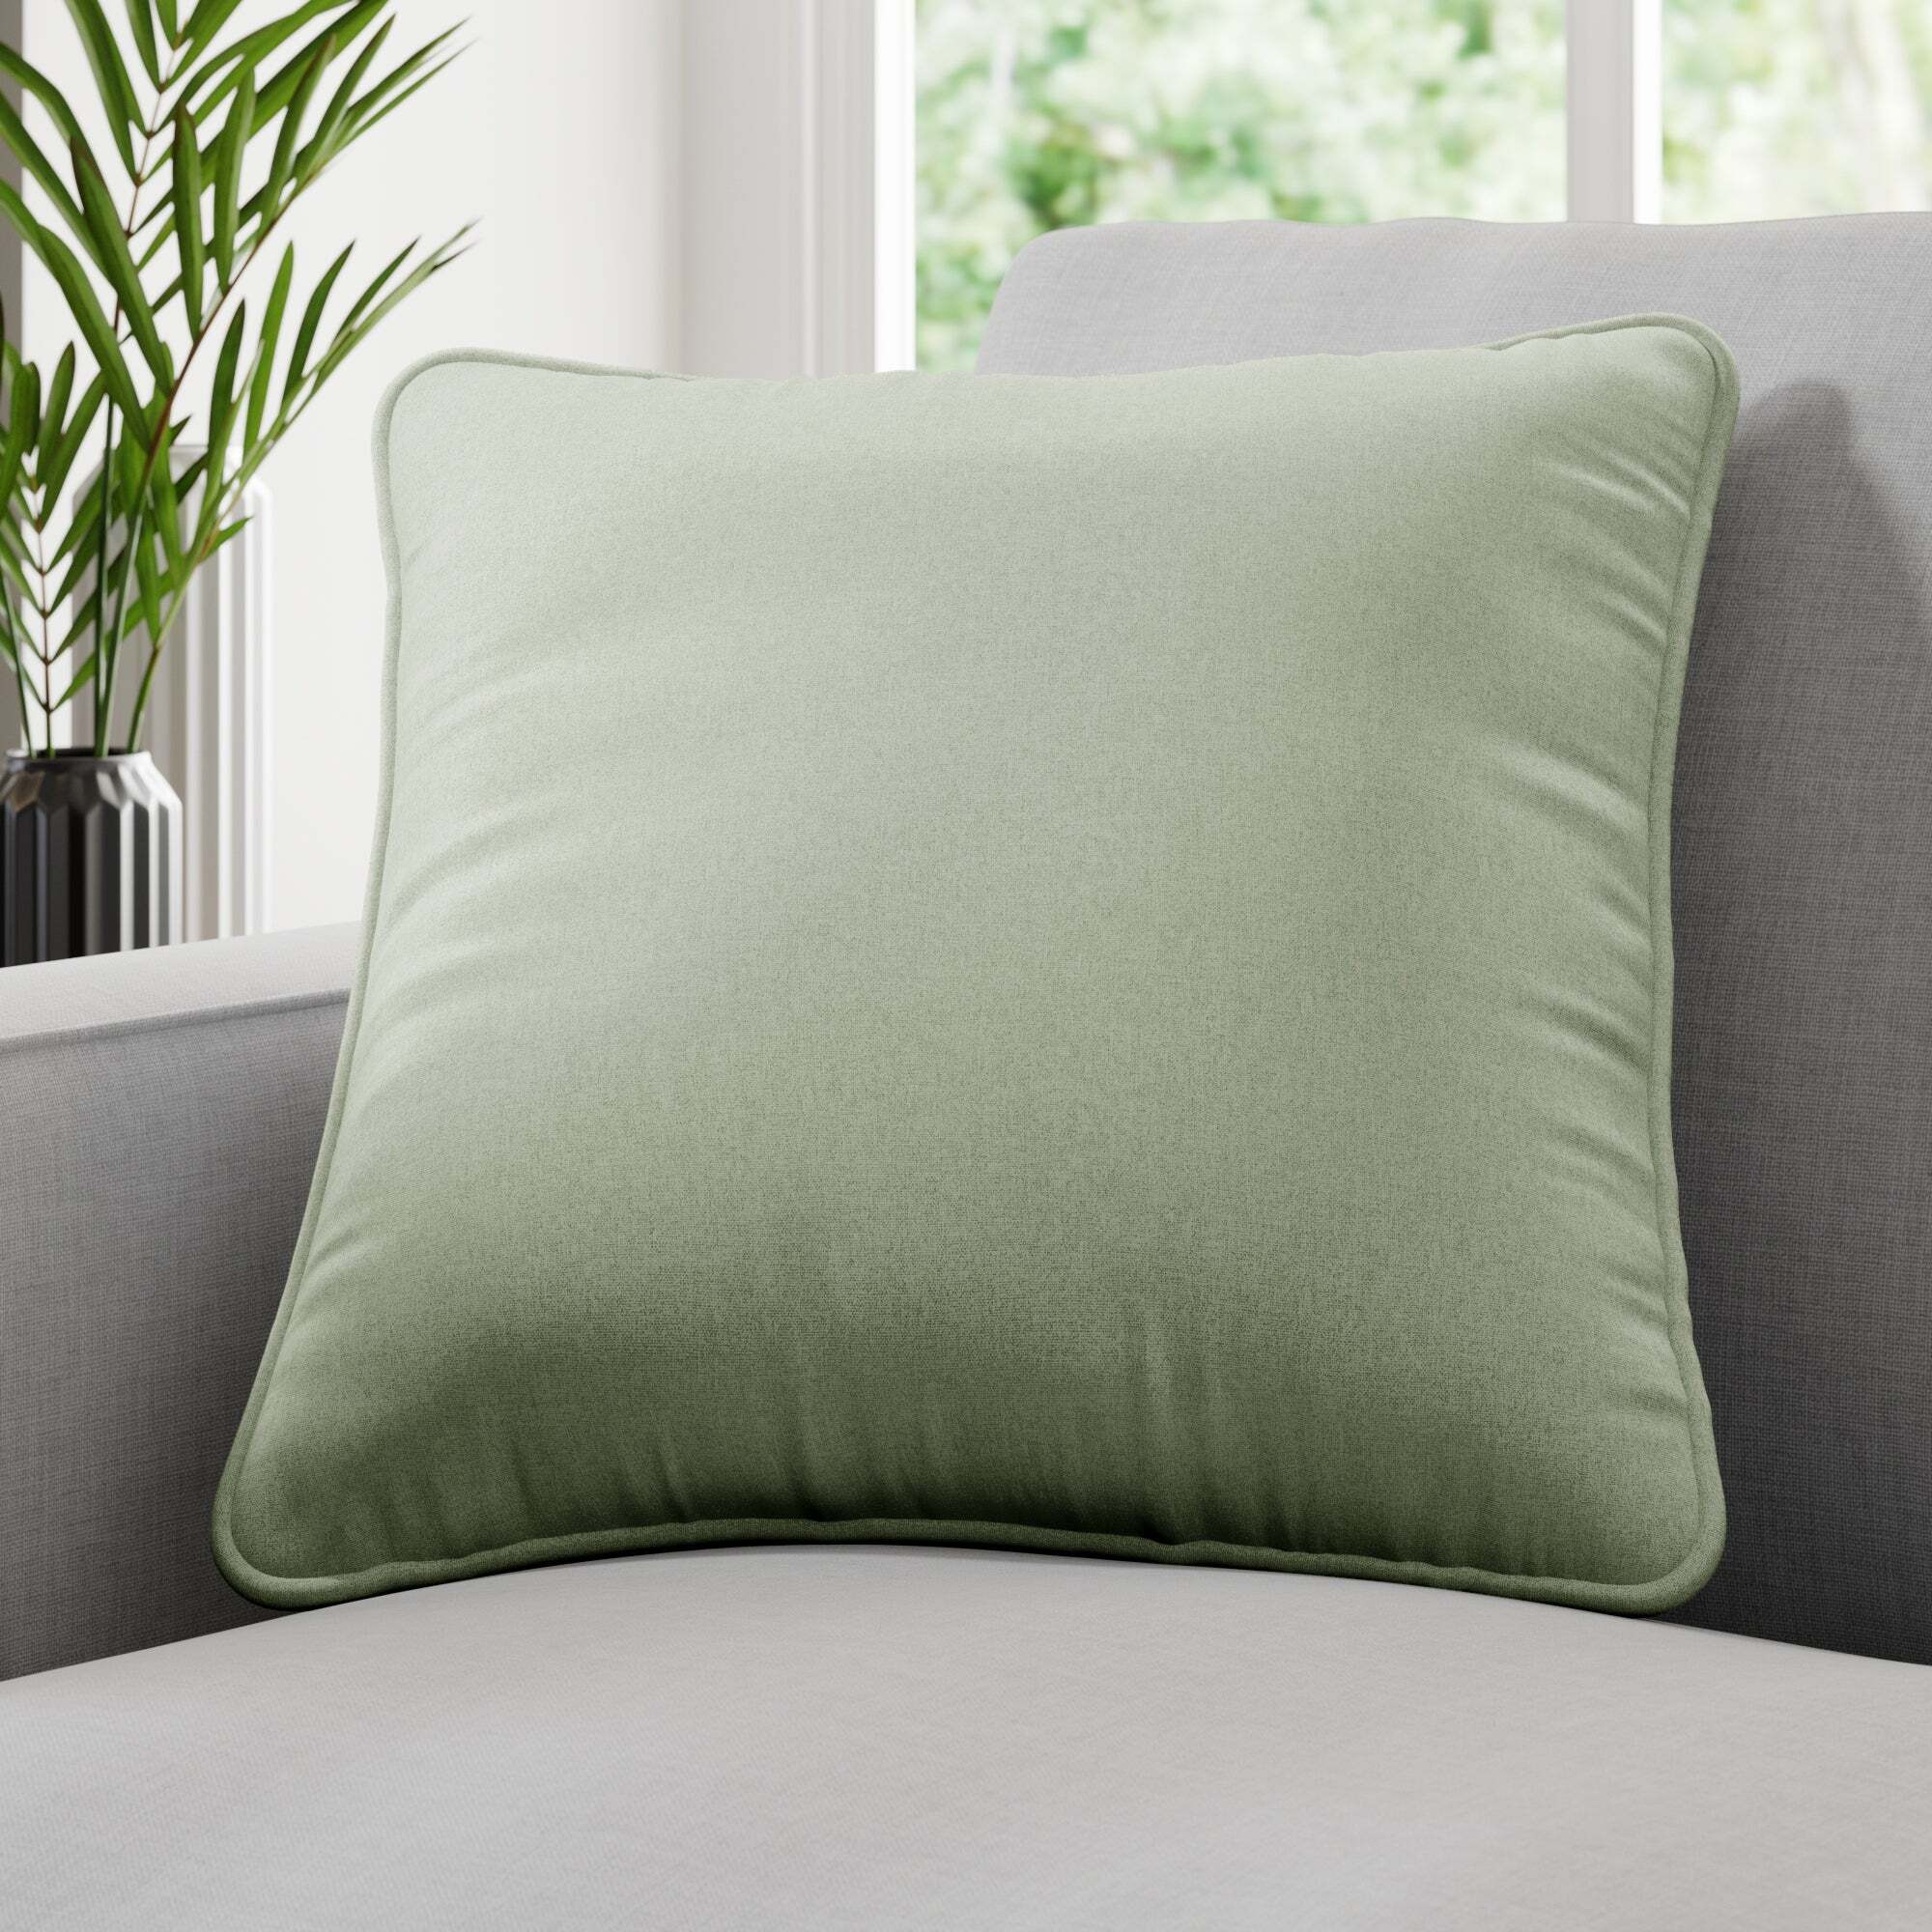 Savanna Made to Order Fire Retardant Cushion Cover Green